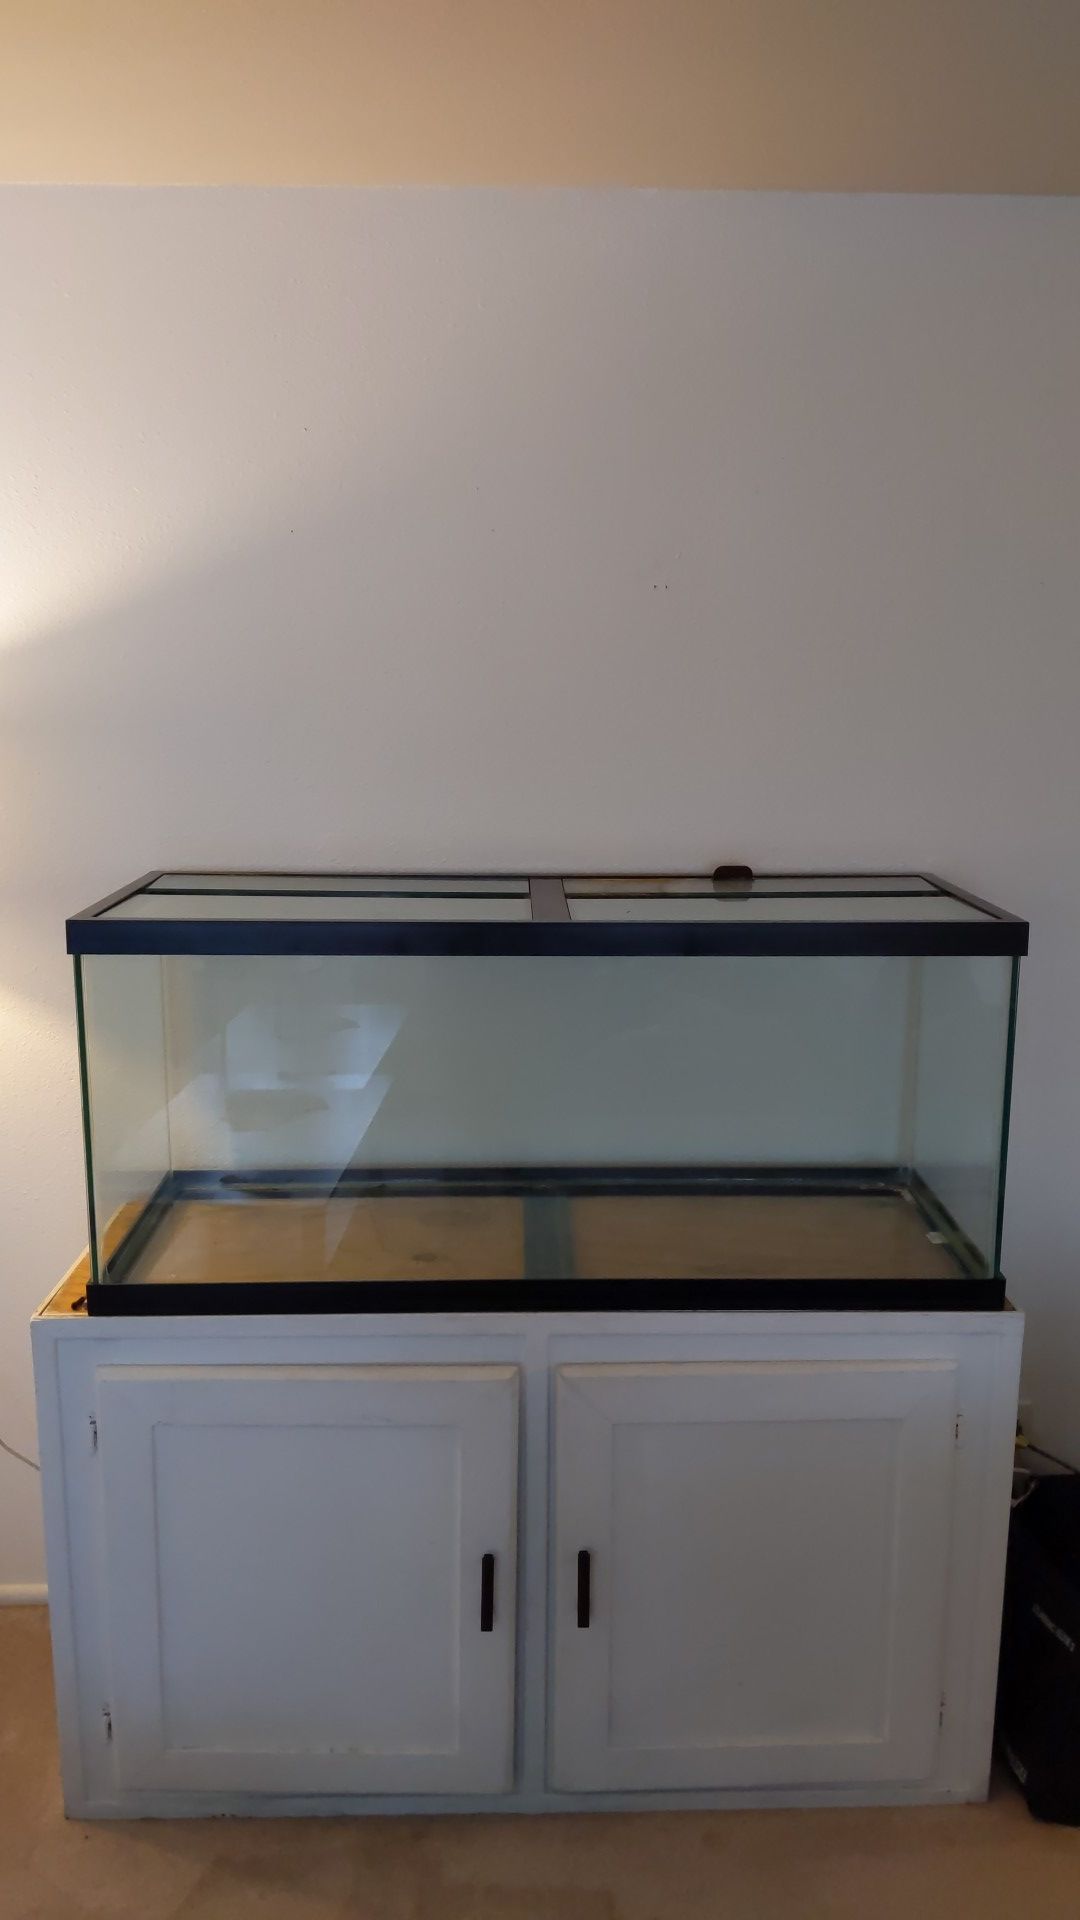 75 gal aquarium tank and stand